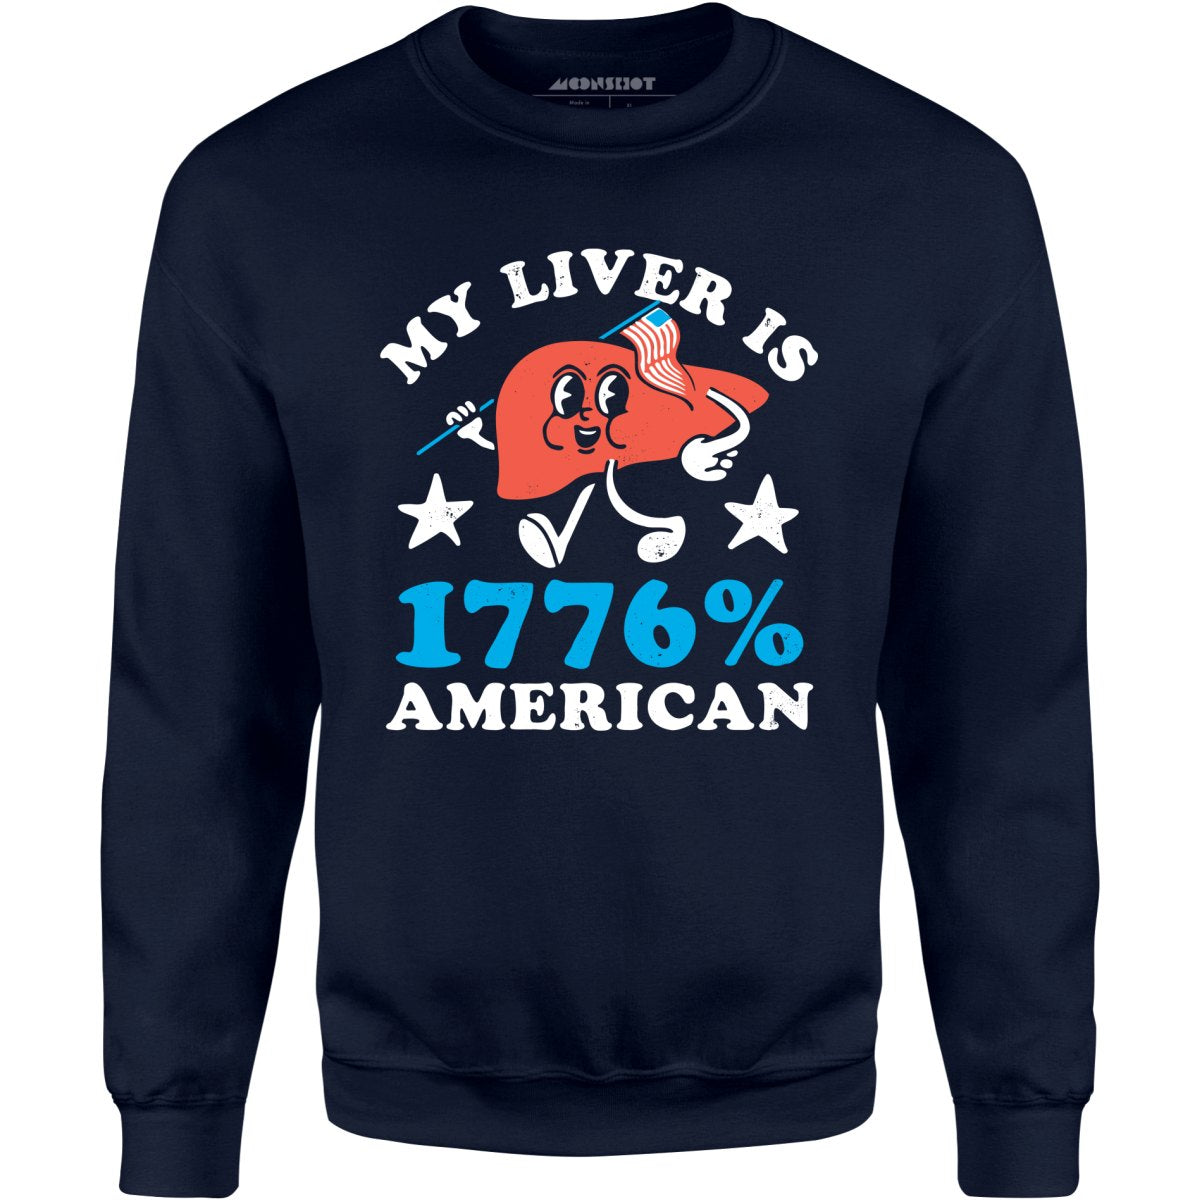 My Liver is 1776 Percent American - Unisex Sweatshirt